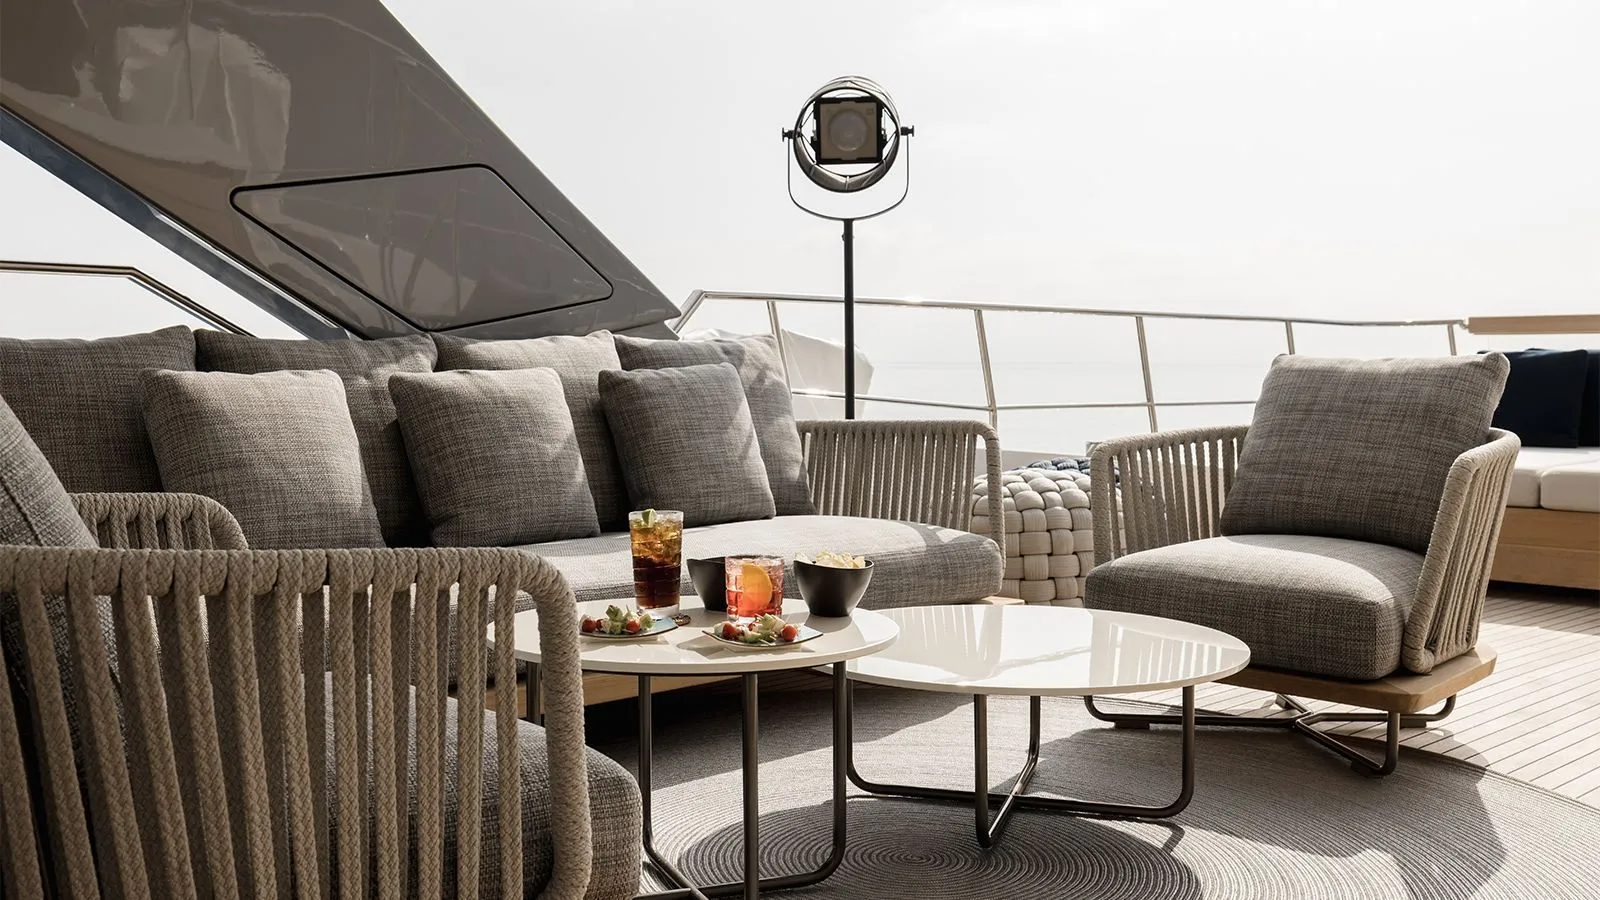 Stylish contemporary deck furnishings